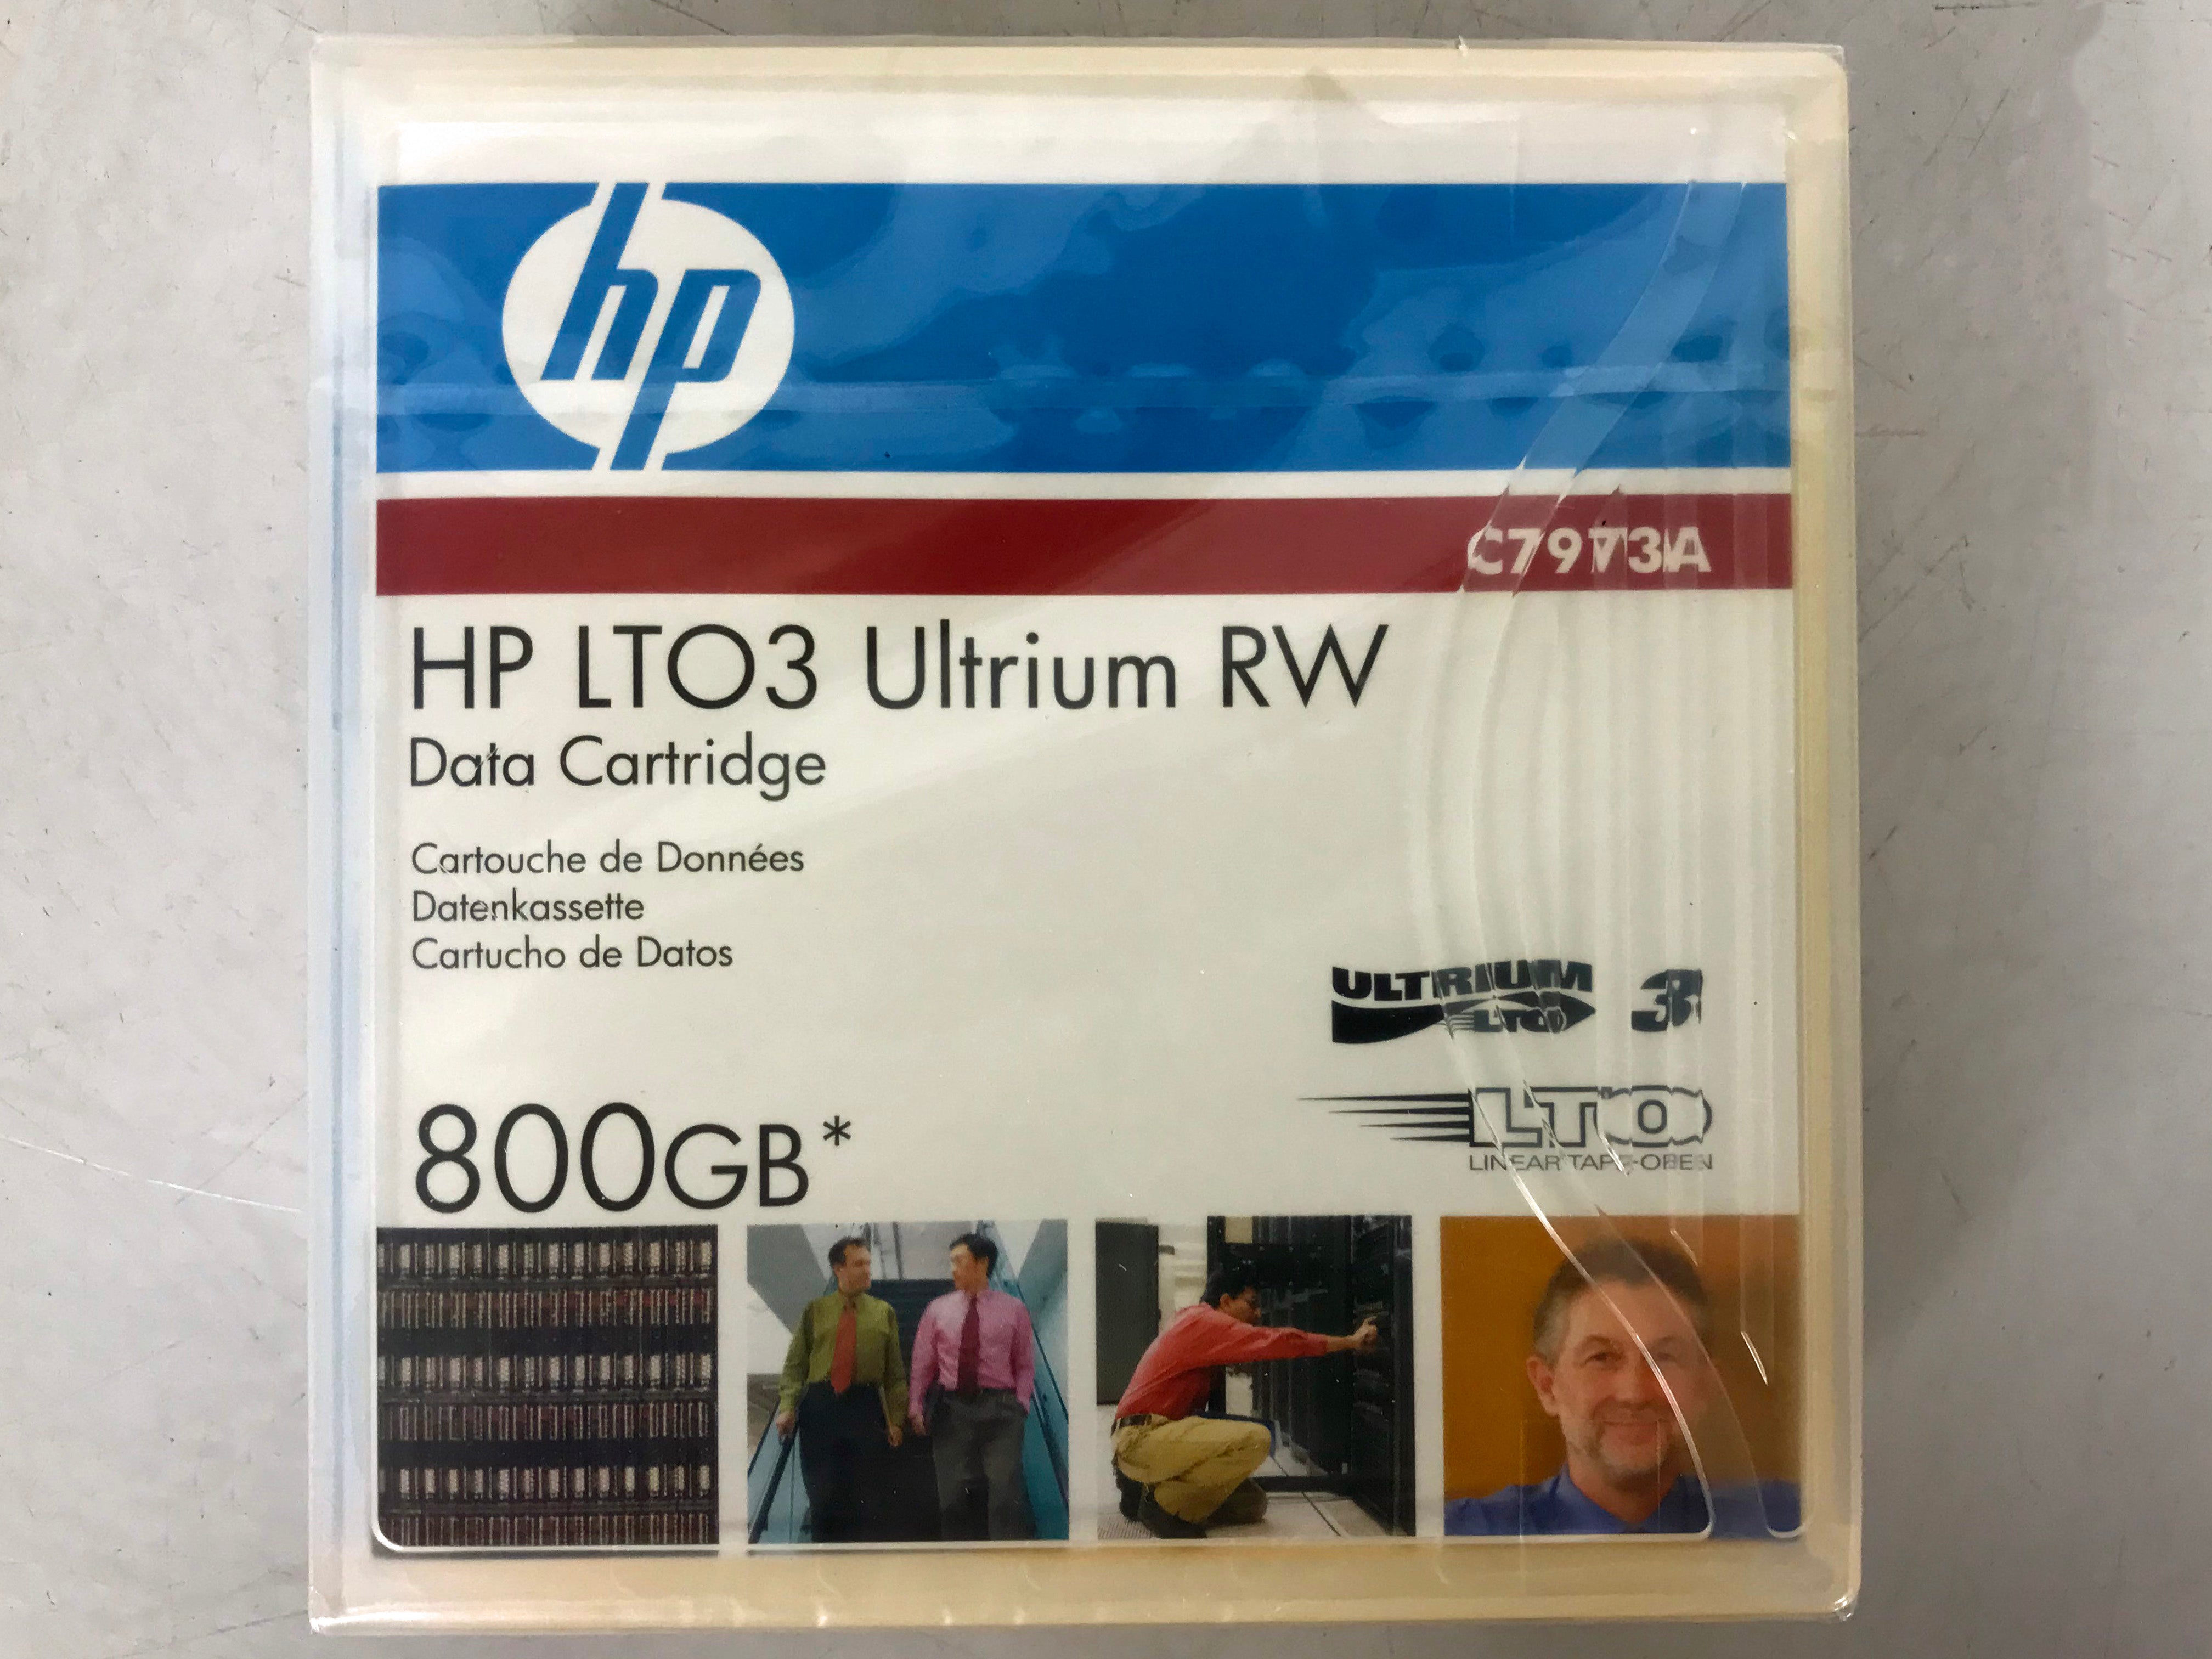 HP C7973A LTO3 Ultrium RW 800GB Data Cartridge